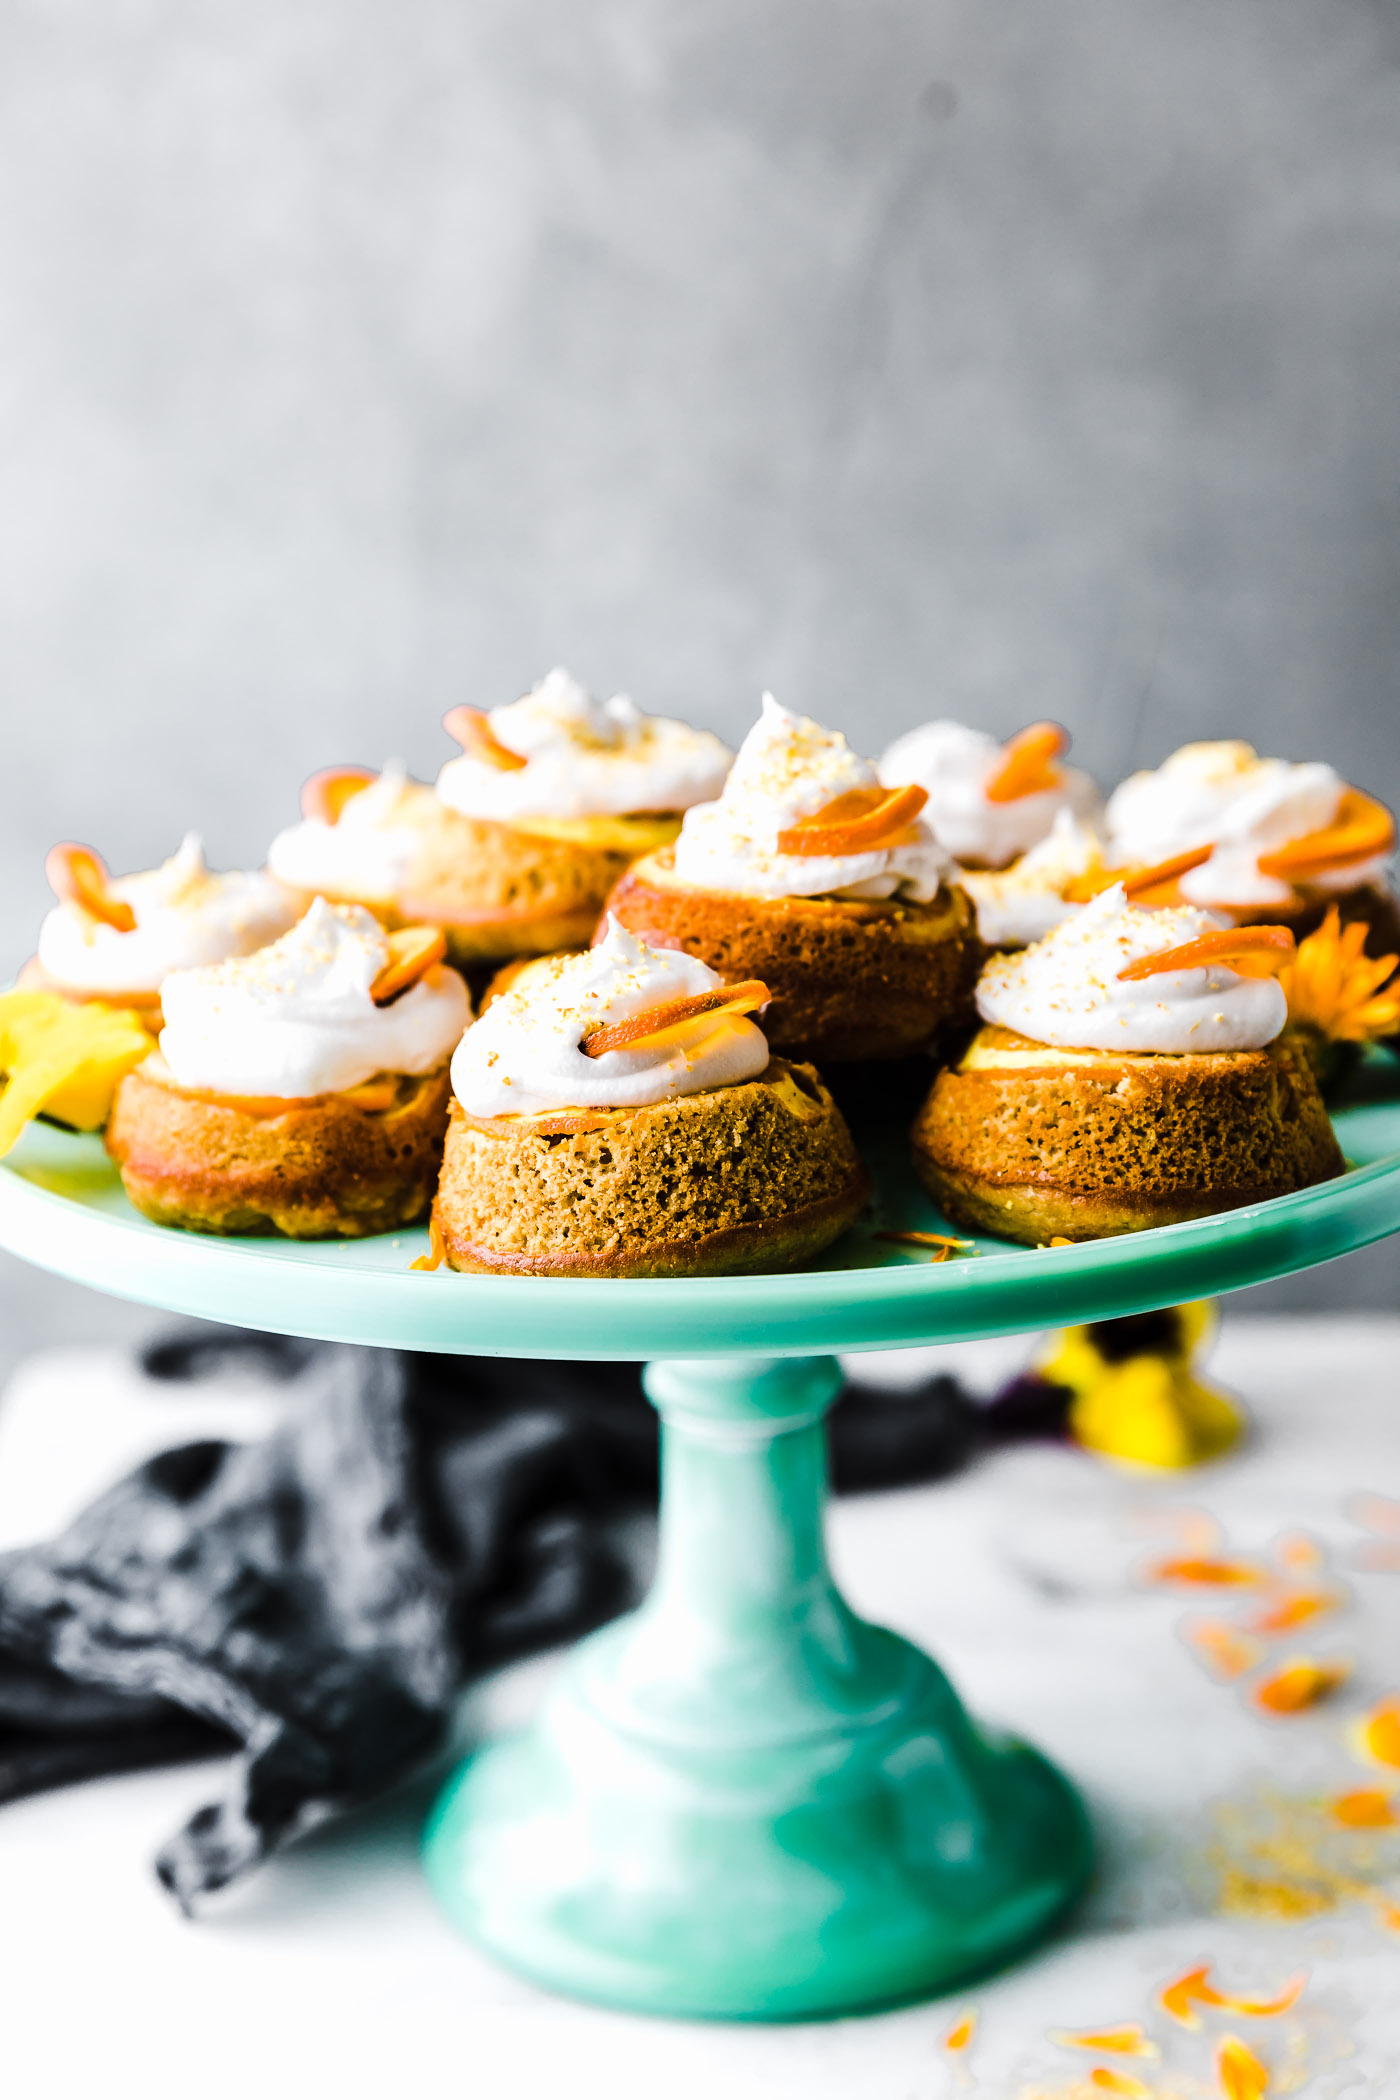 Mini orange paleo upside down cakes topped with cream and orange slice on turquoise cake stand